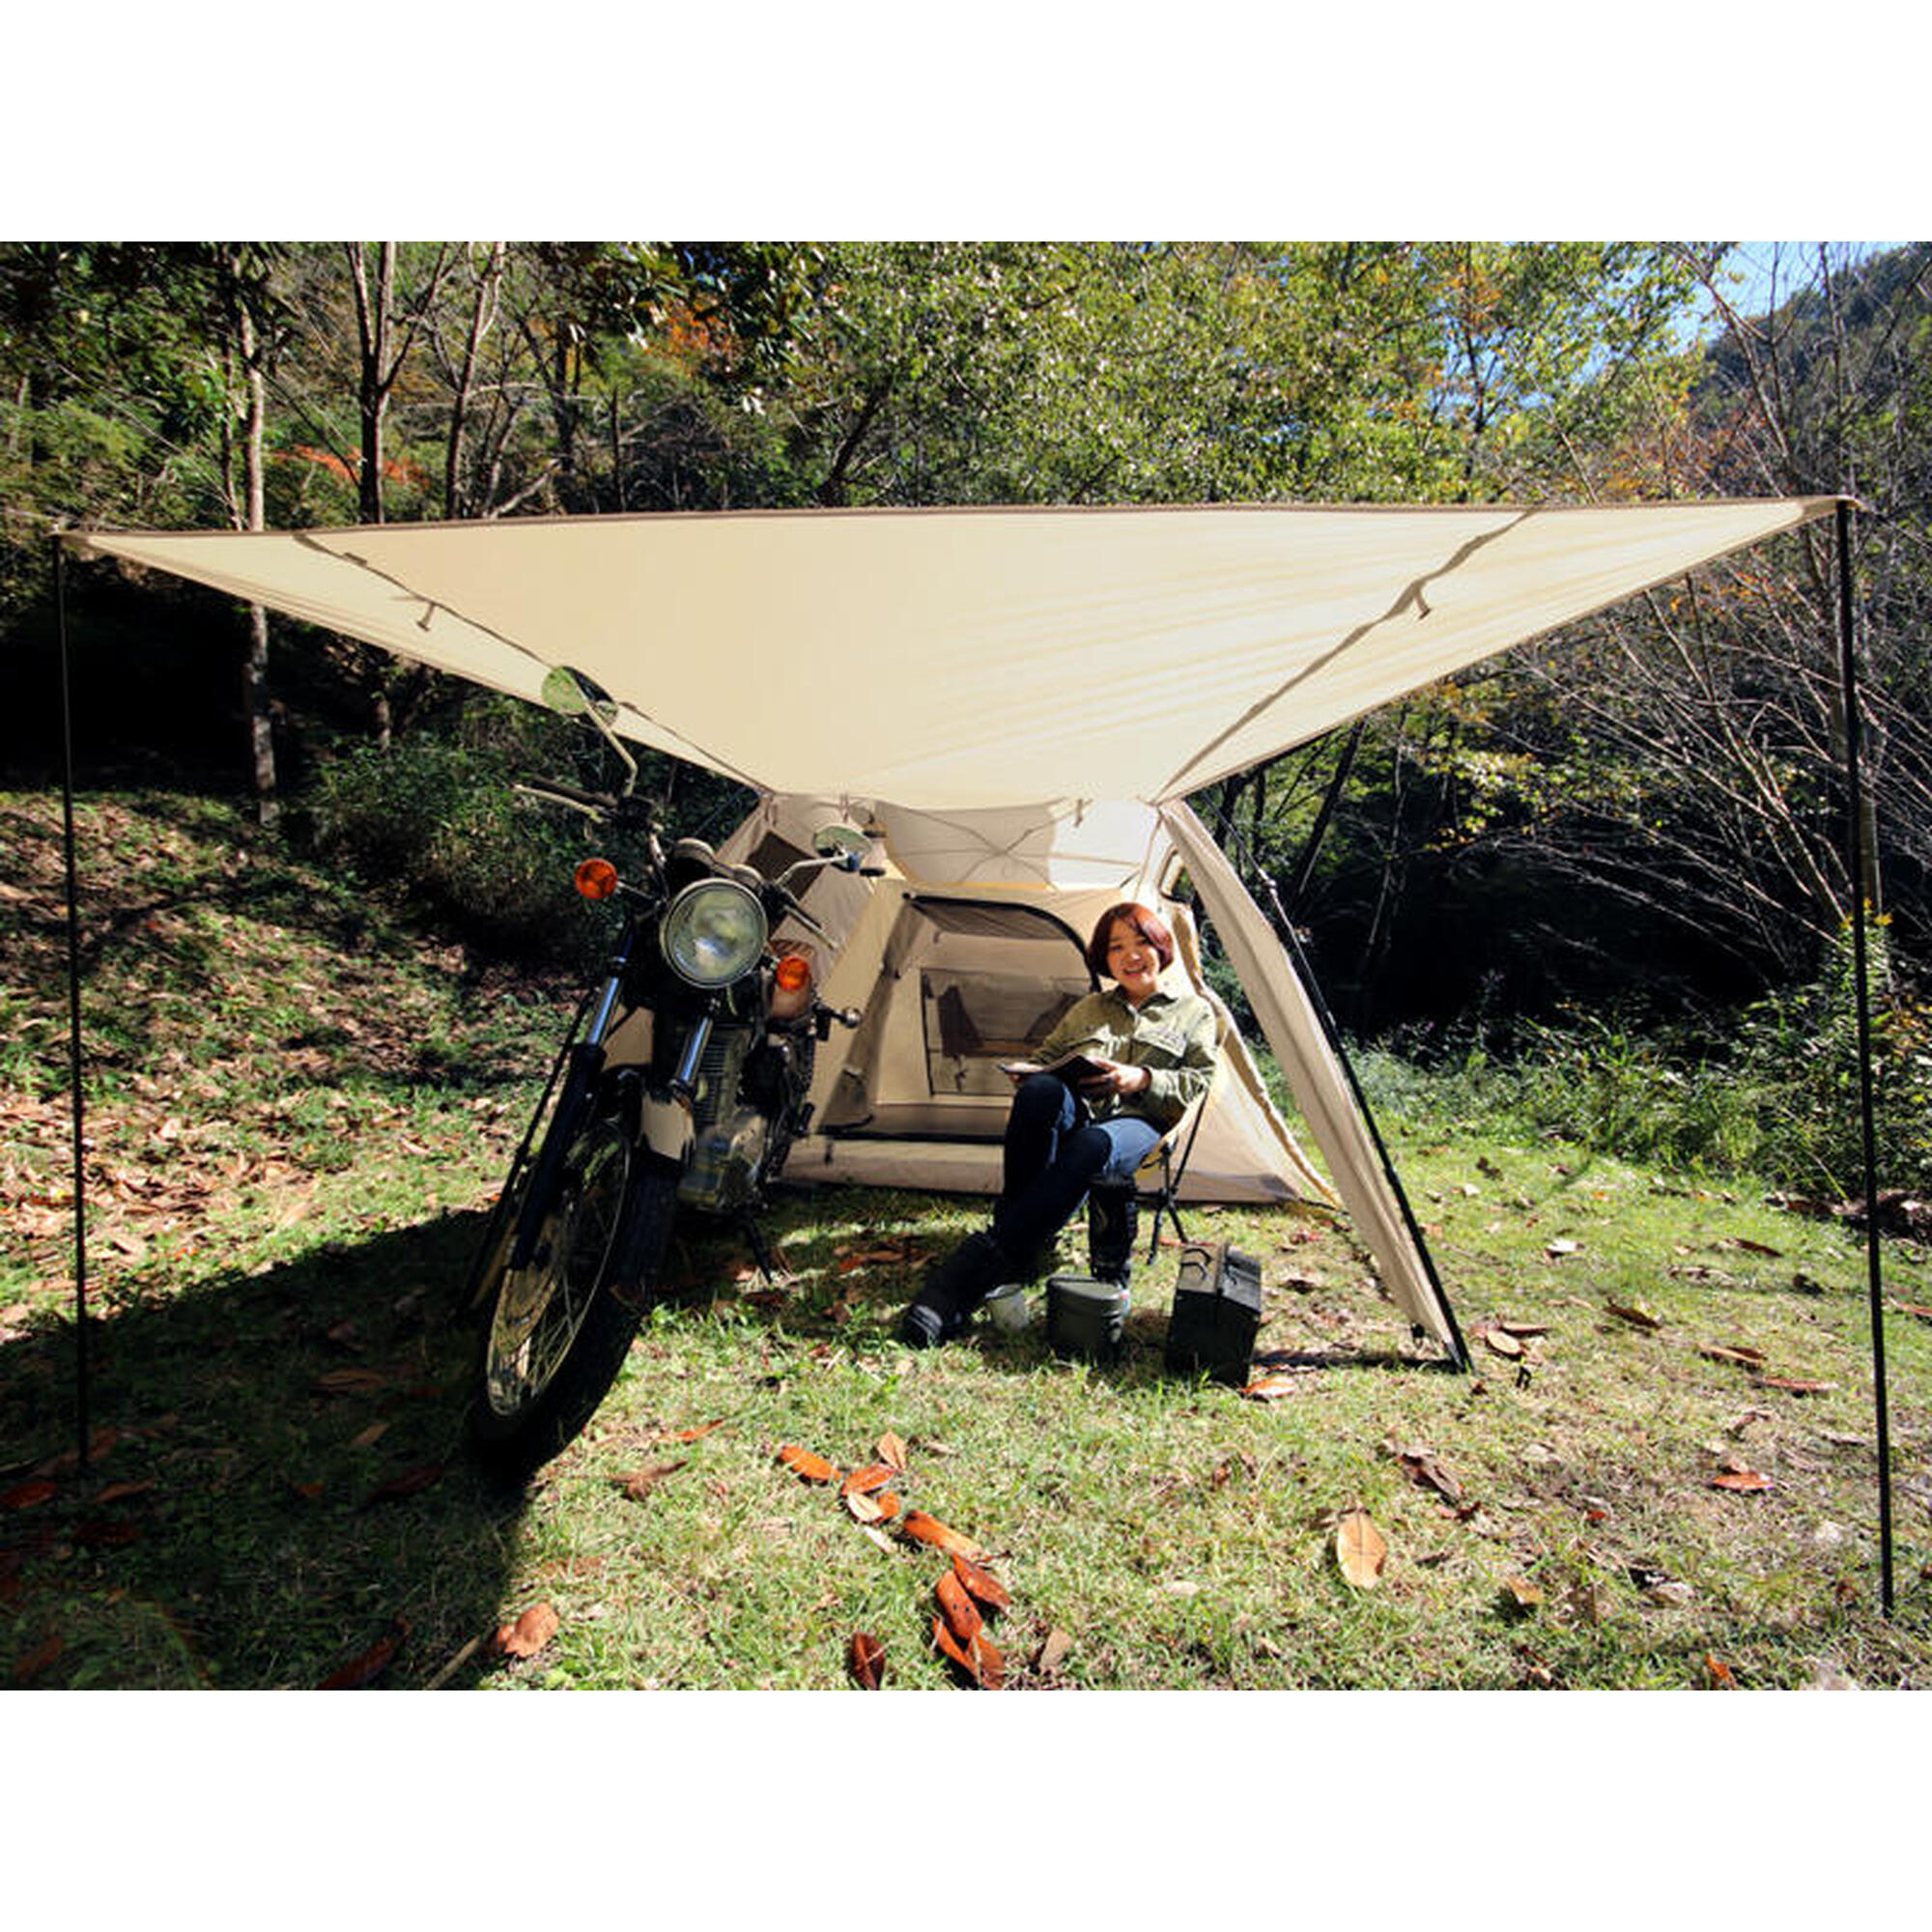 Rider's Bike In T2-466-TN 2 Person Camping Tent - Tan